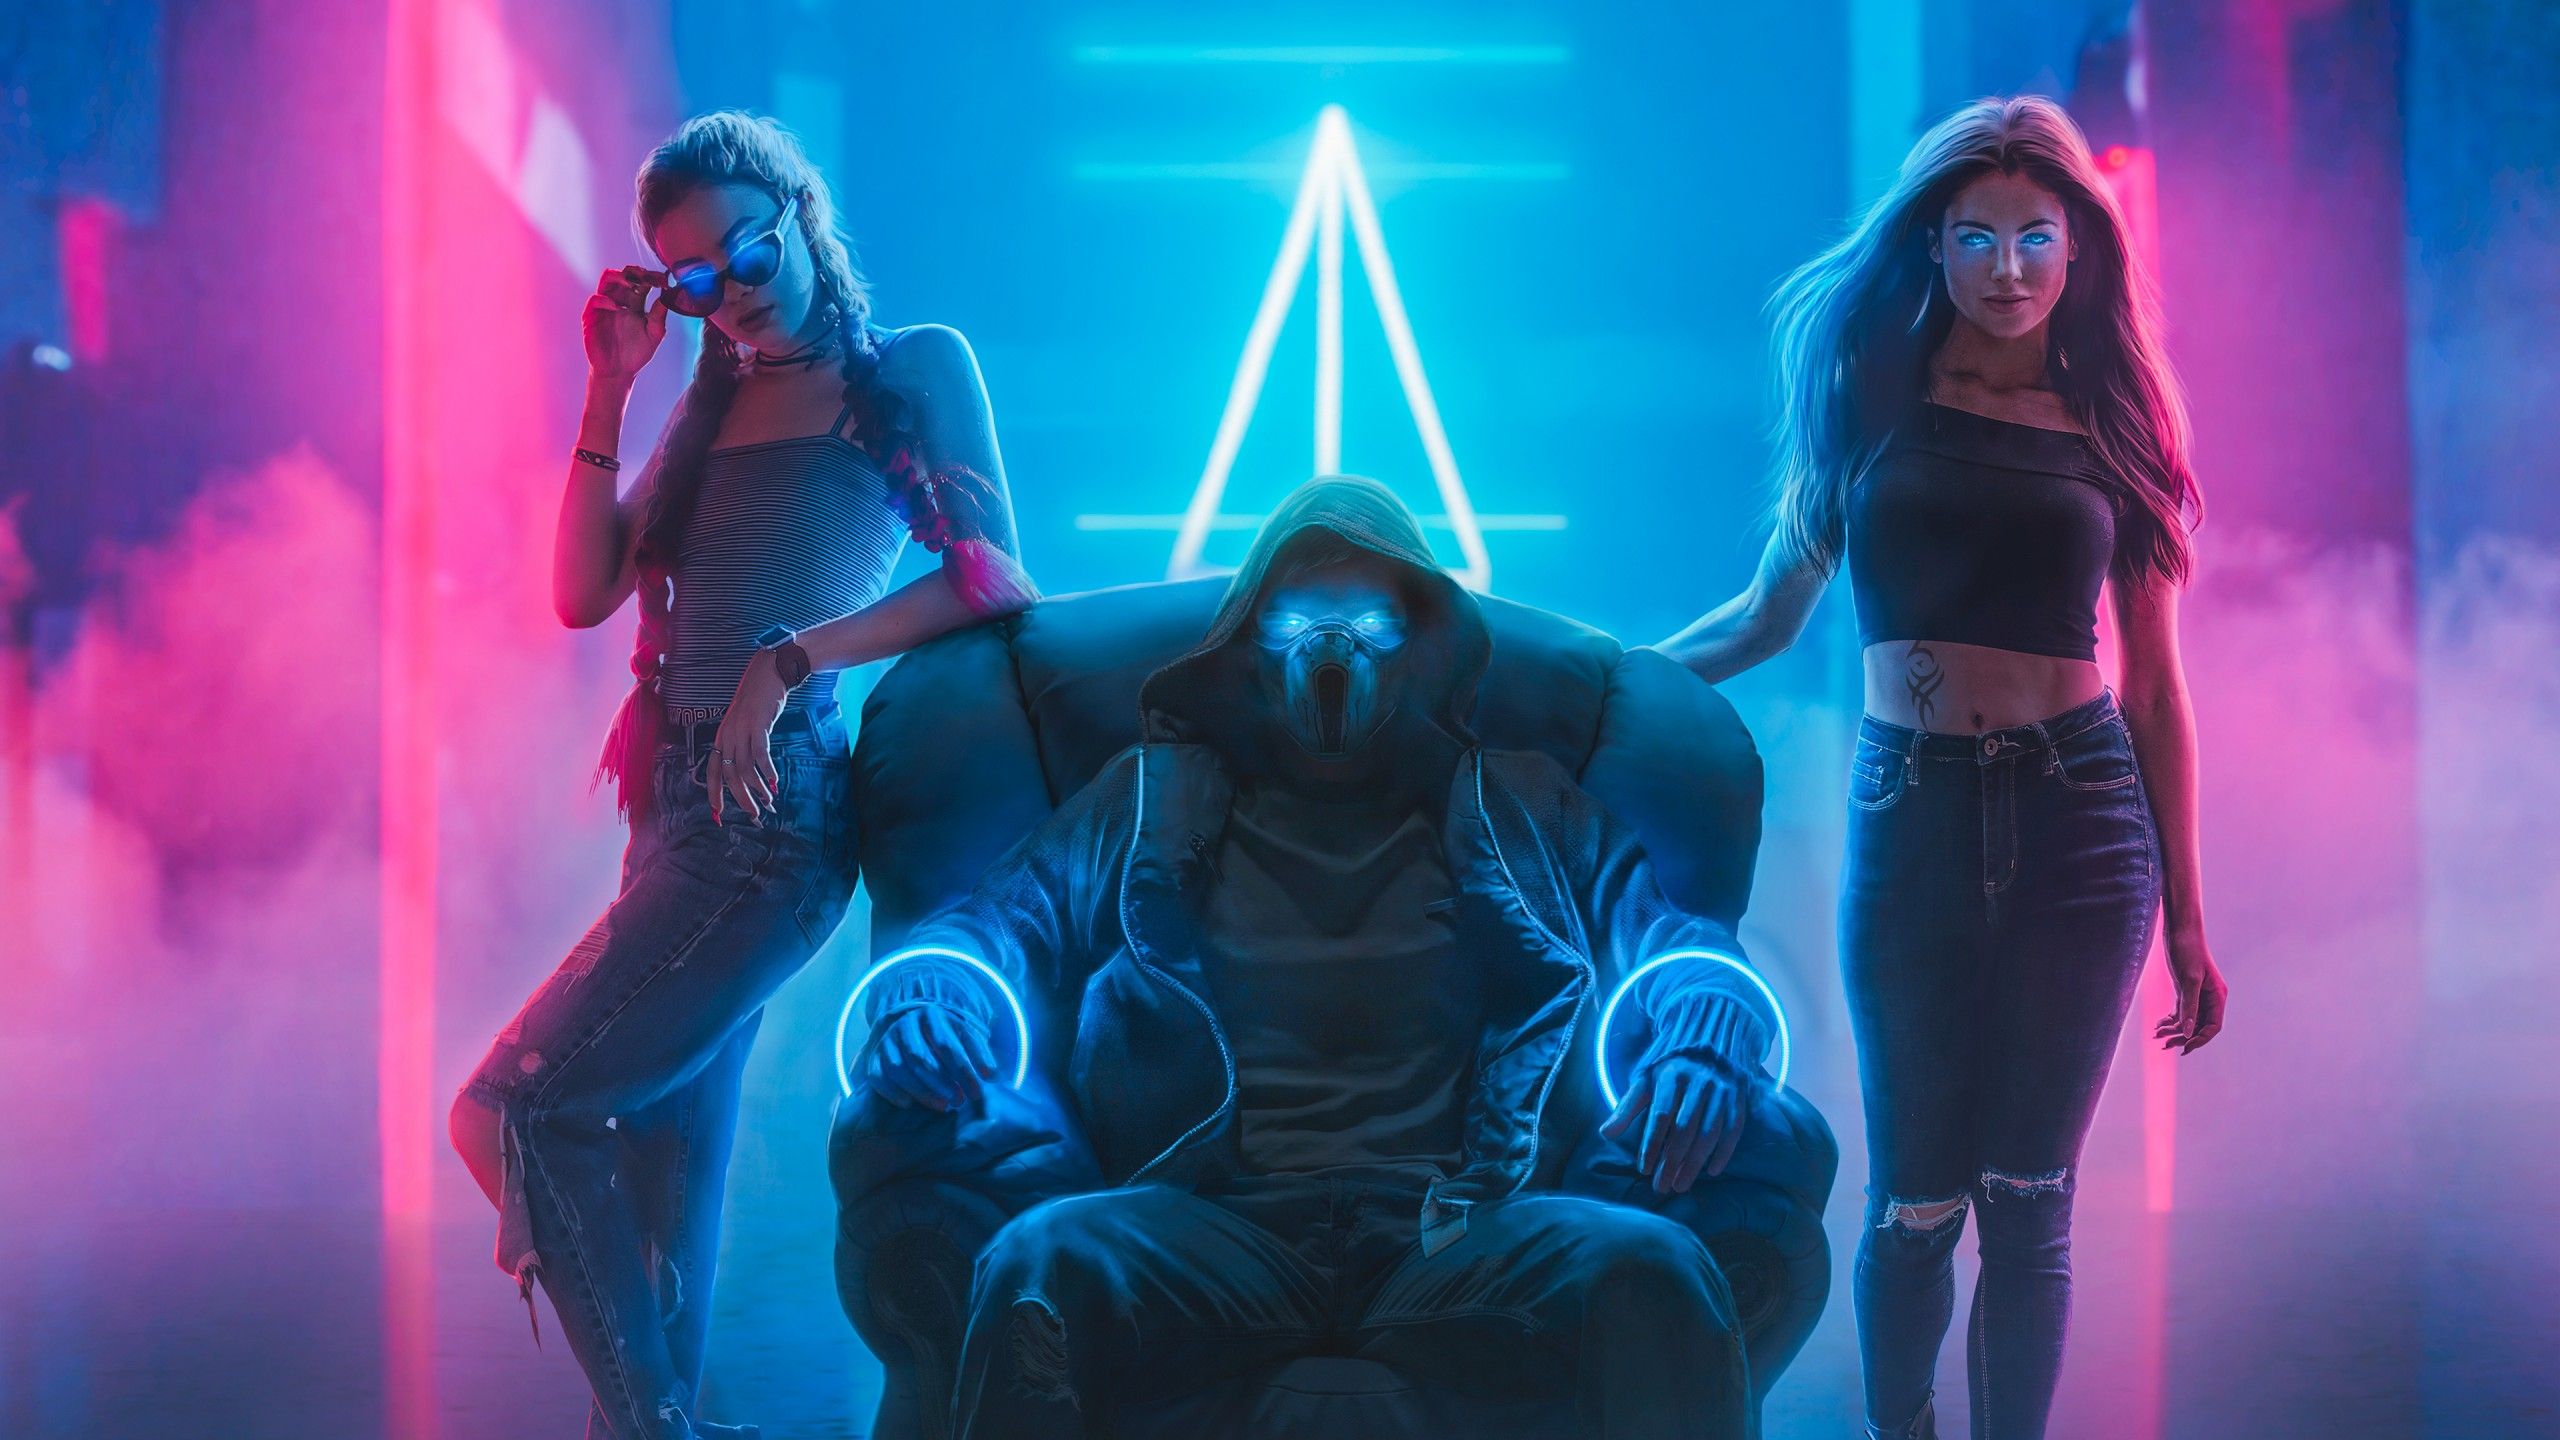 Bad boy 4K Wallpaper, Bad girls, Neon light, Night club, Mask, Cyberpunk, Digital Art, Graphics CGI